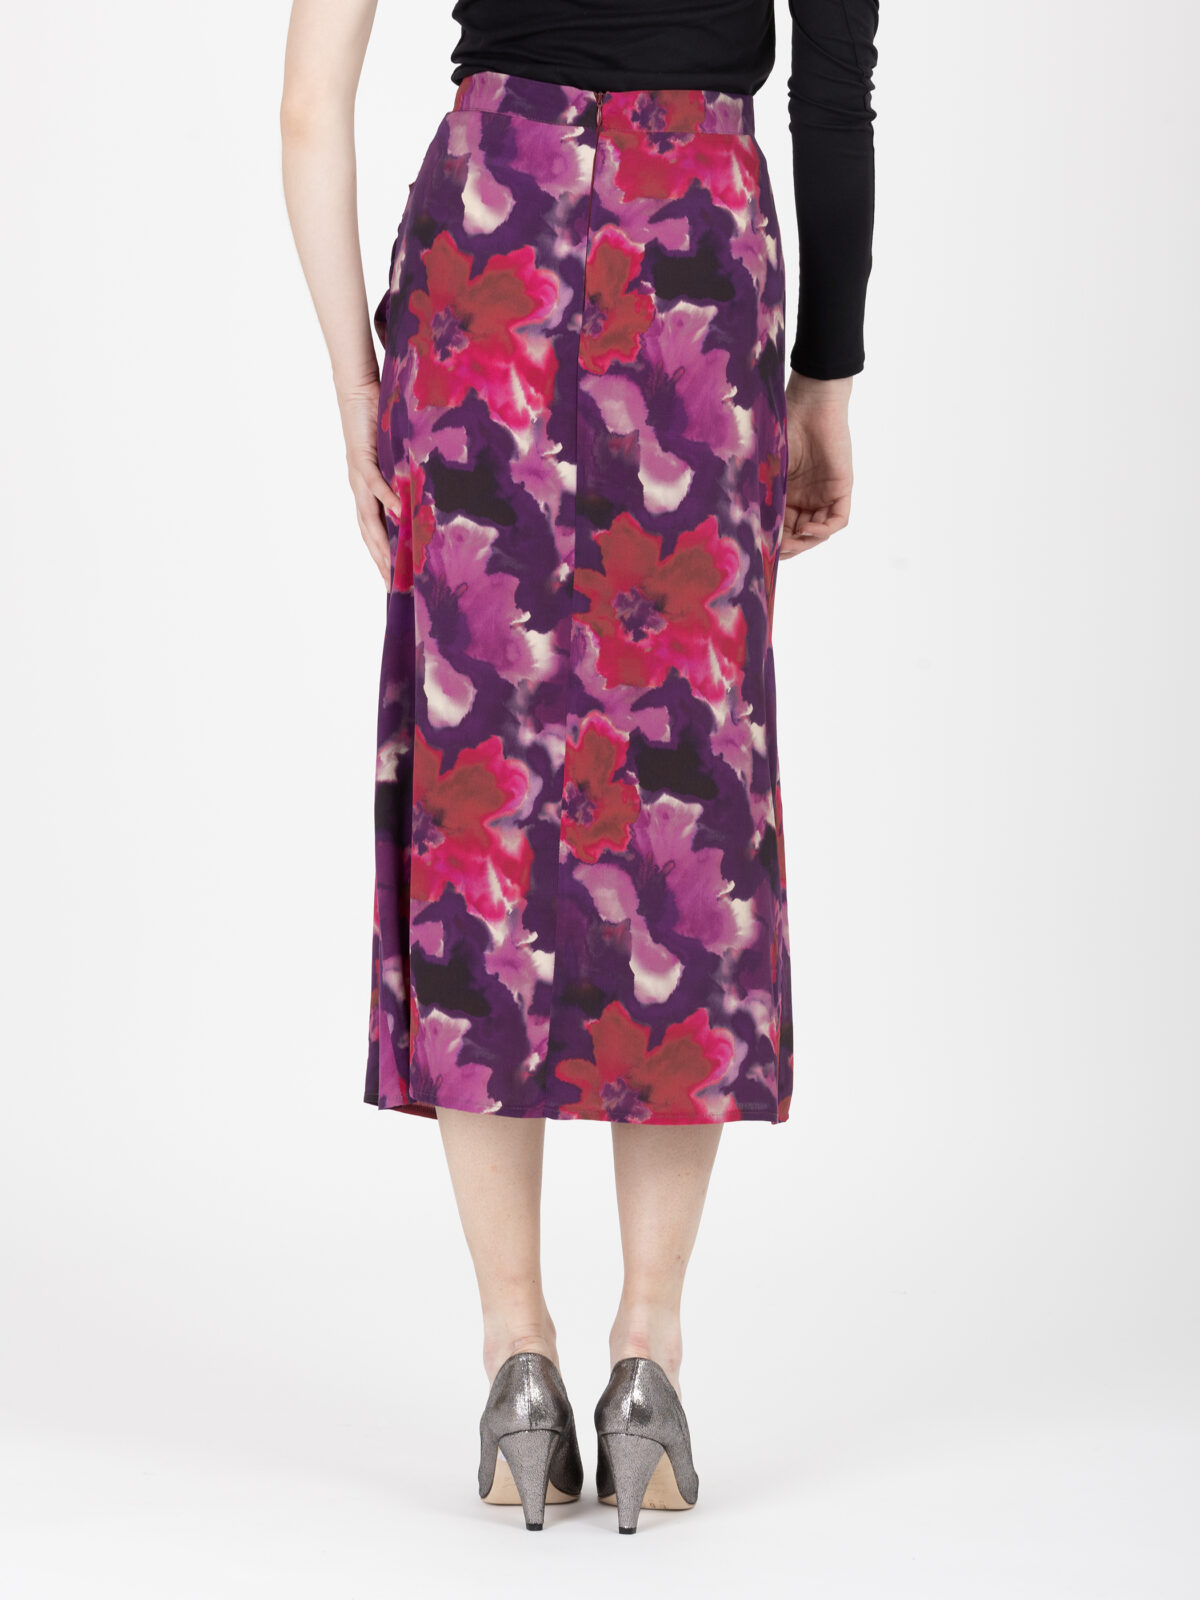 naomi-skirt-viscose-printed-floral-bordeaux-ruched-uniforme-athens-greek-designers-matchboxathens